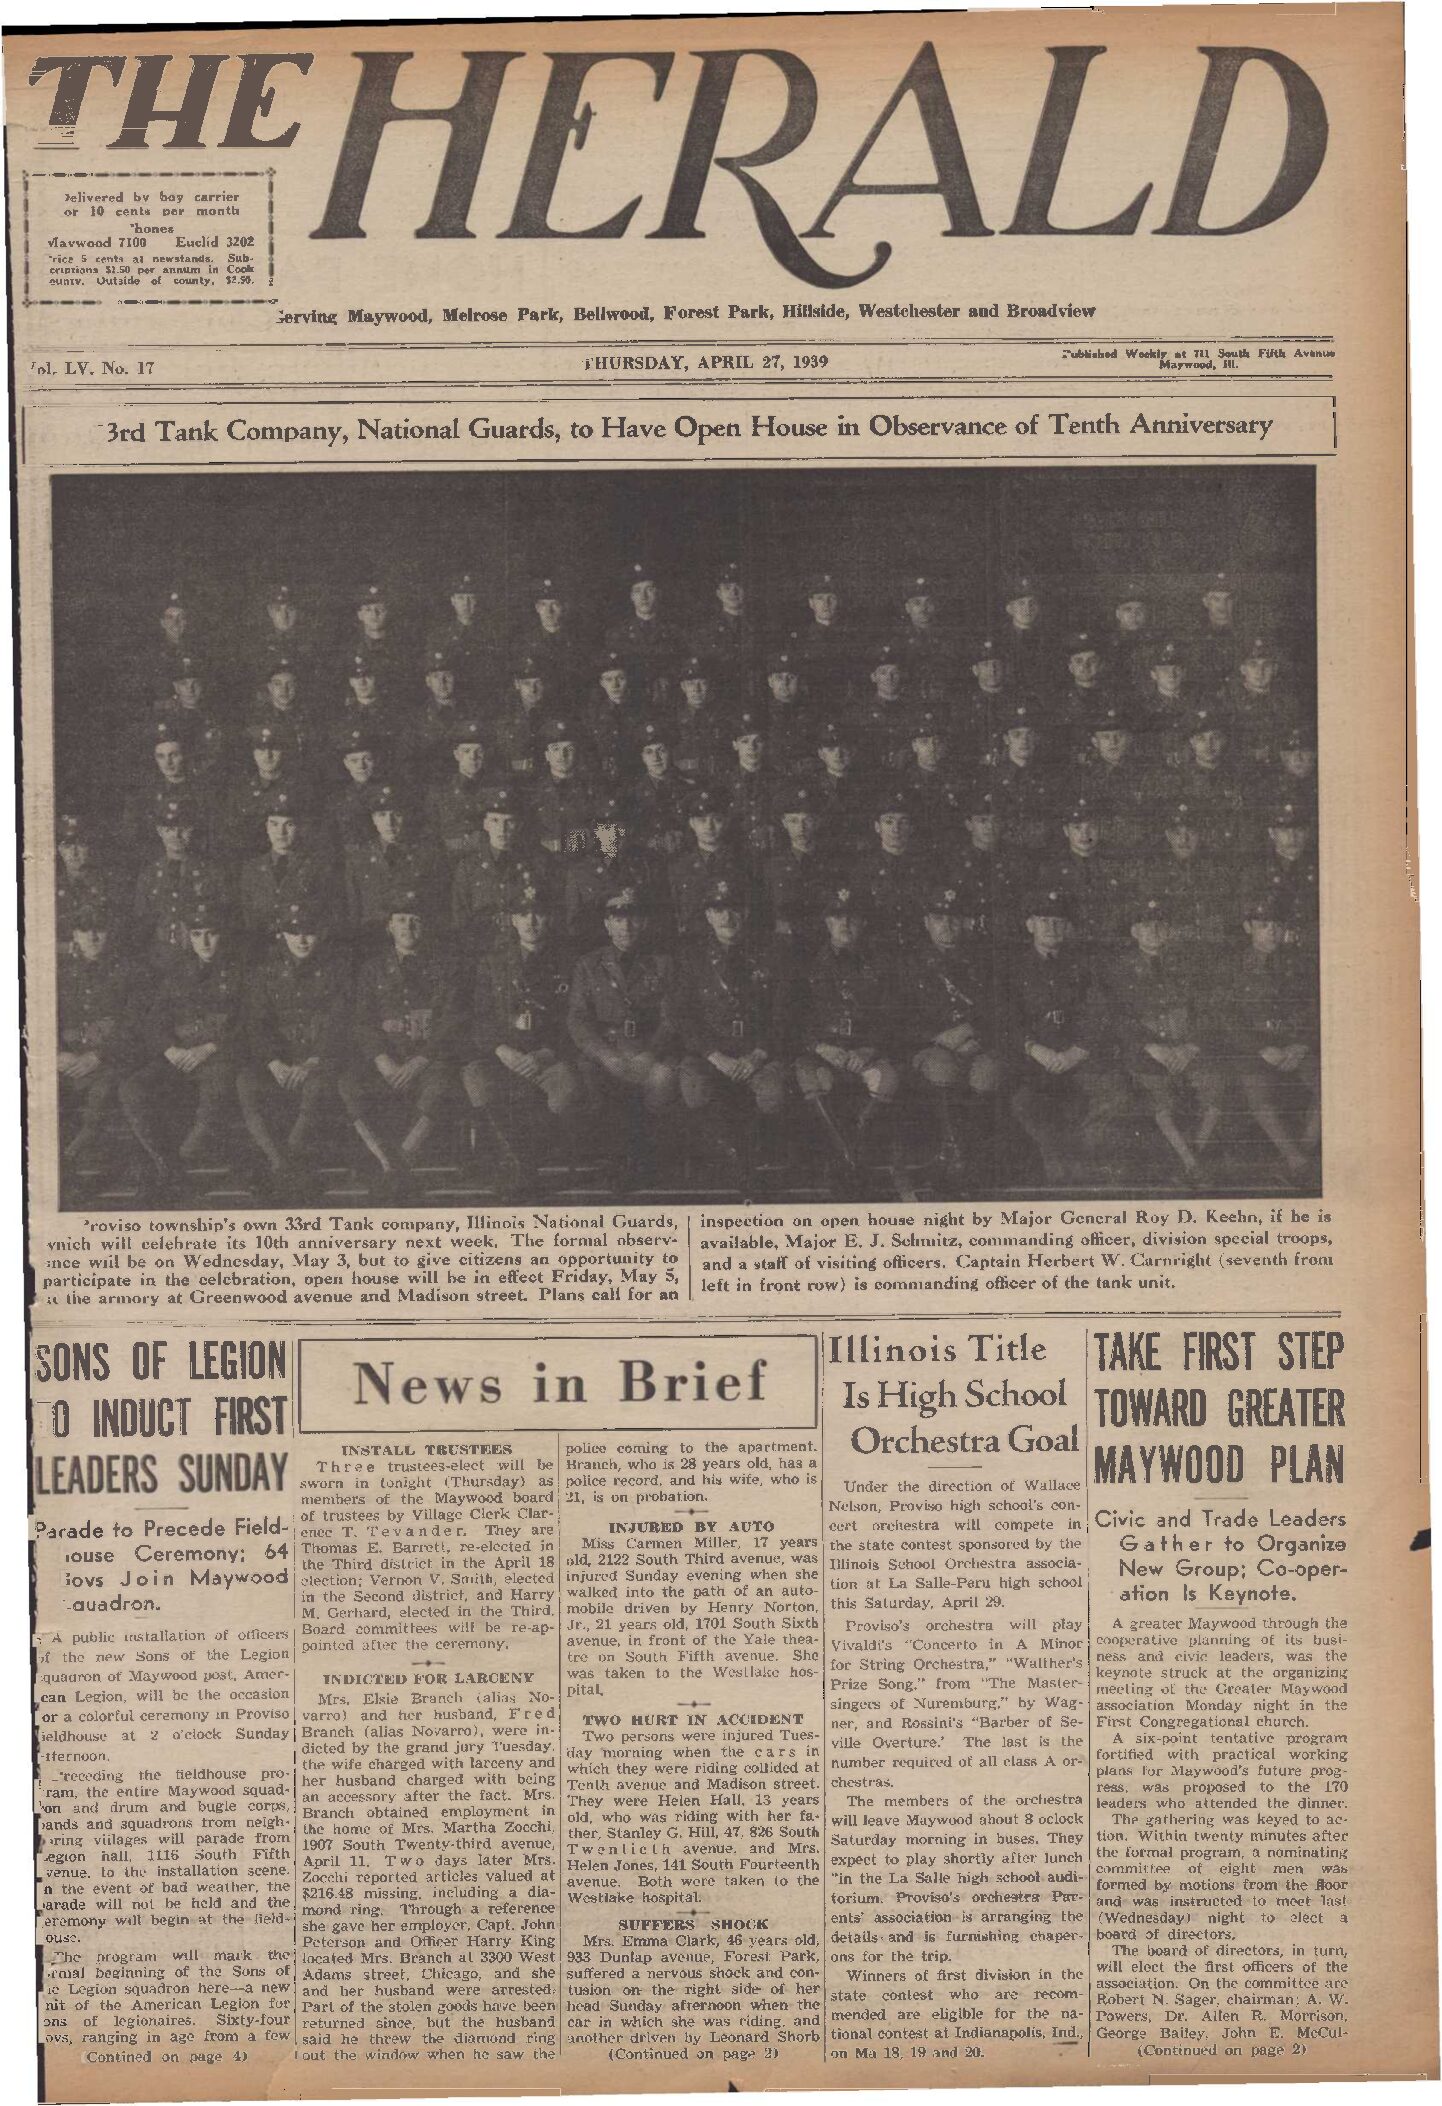 The Herald – 19390427